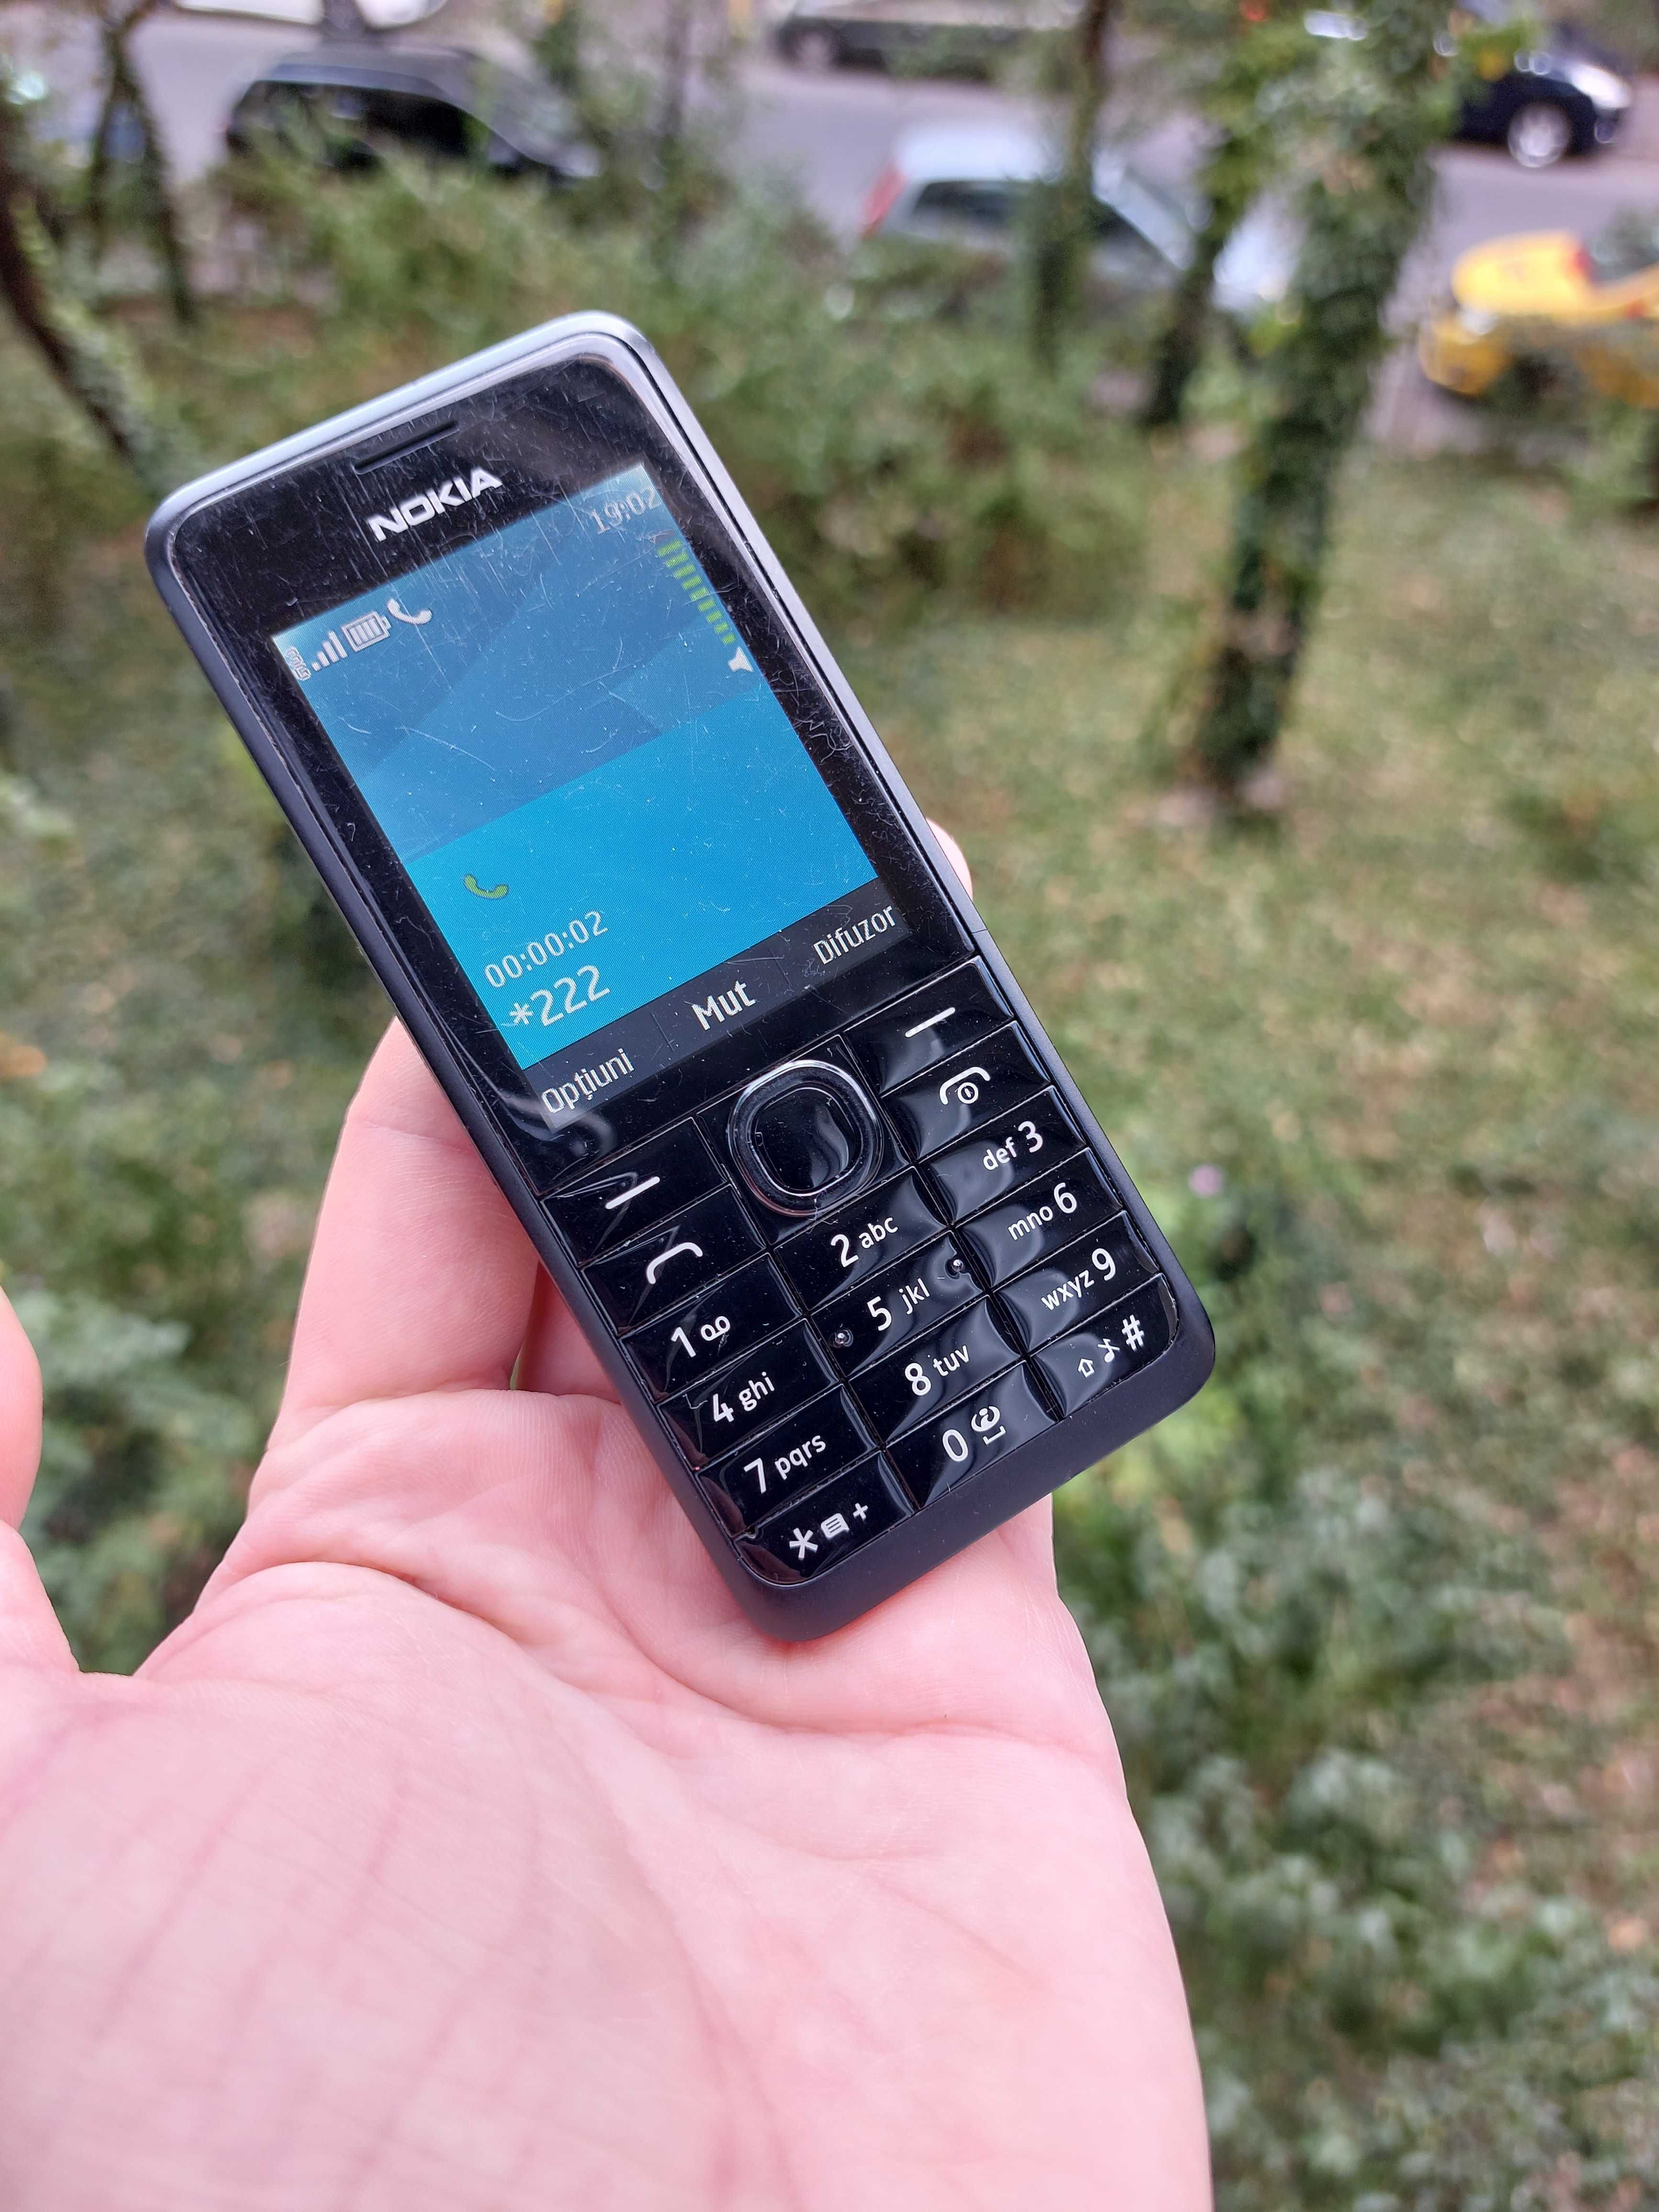 Nokia 301 negru original necodat meniu romana putine vb ore pe el